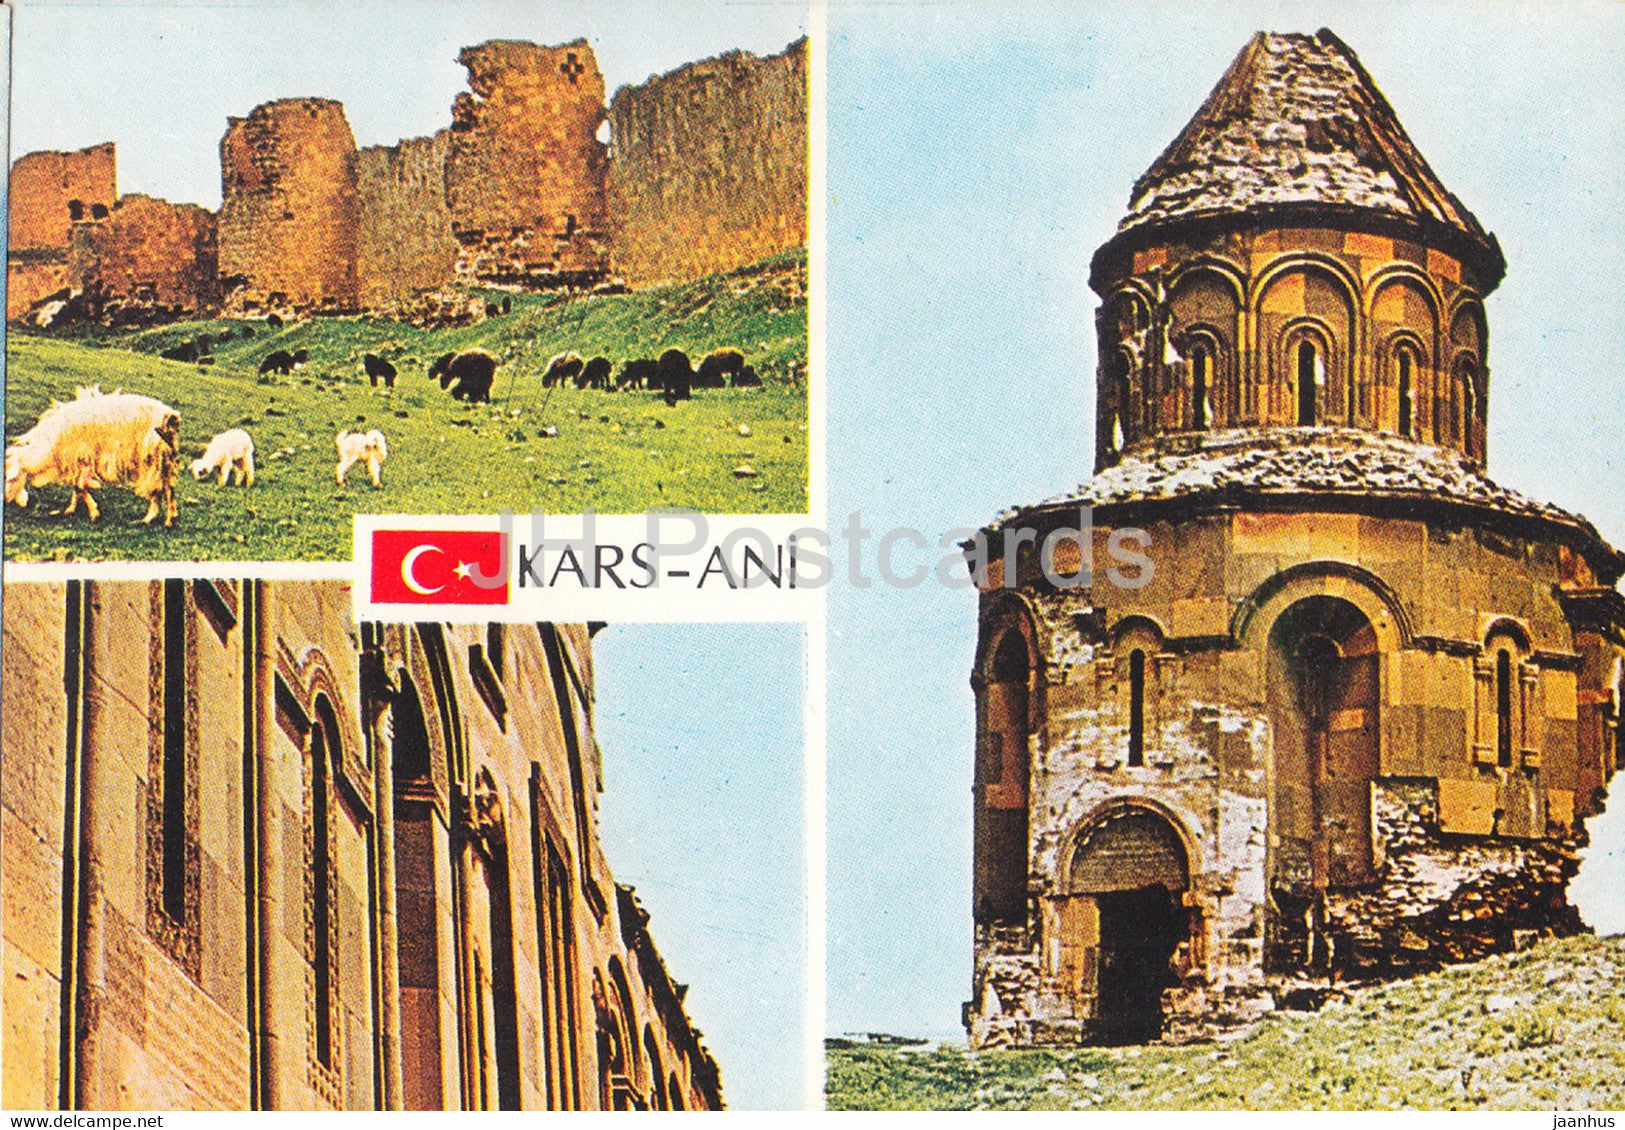 Kars Ani - church ruins - sheep - multiview - Turkey - unused - JH Postcards